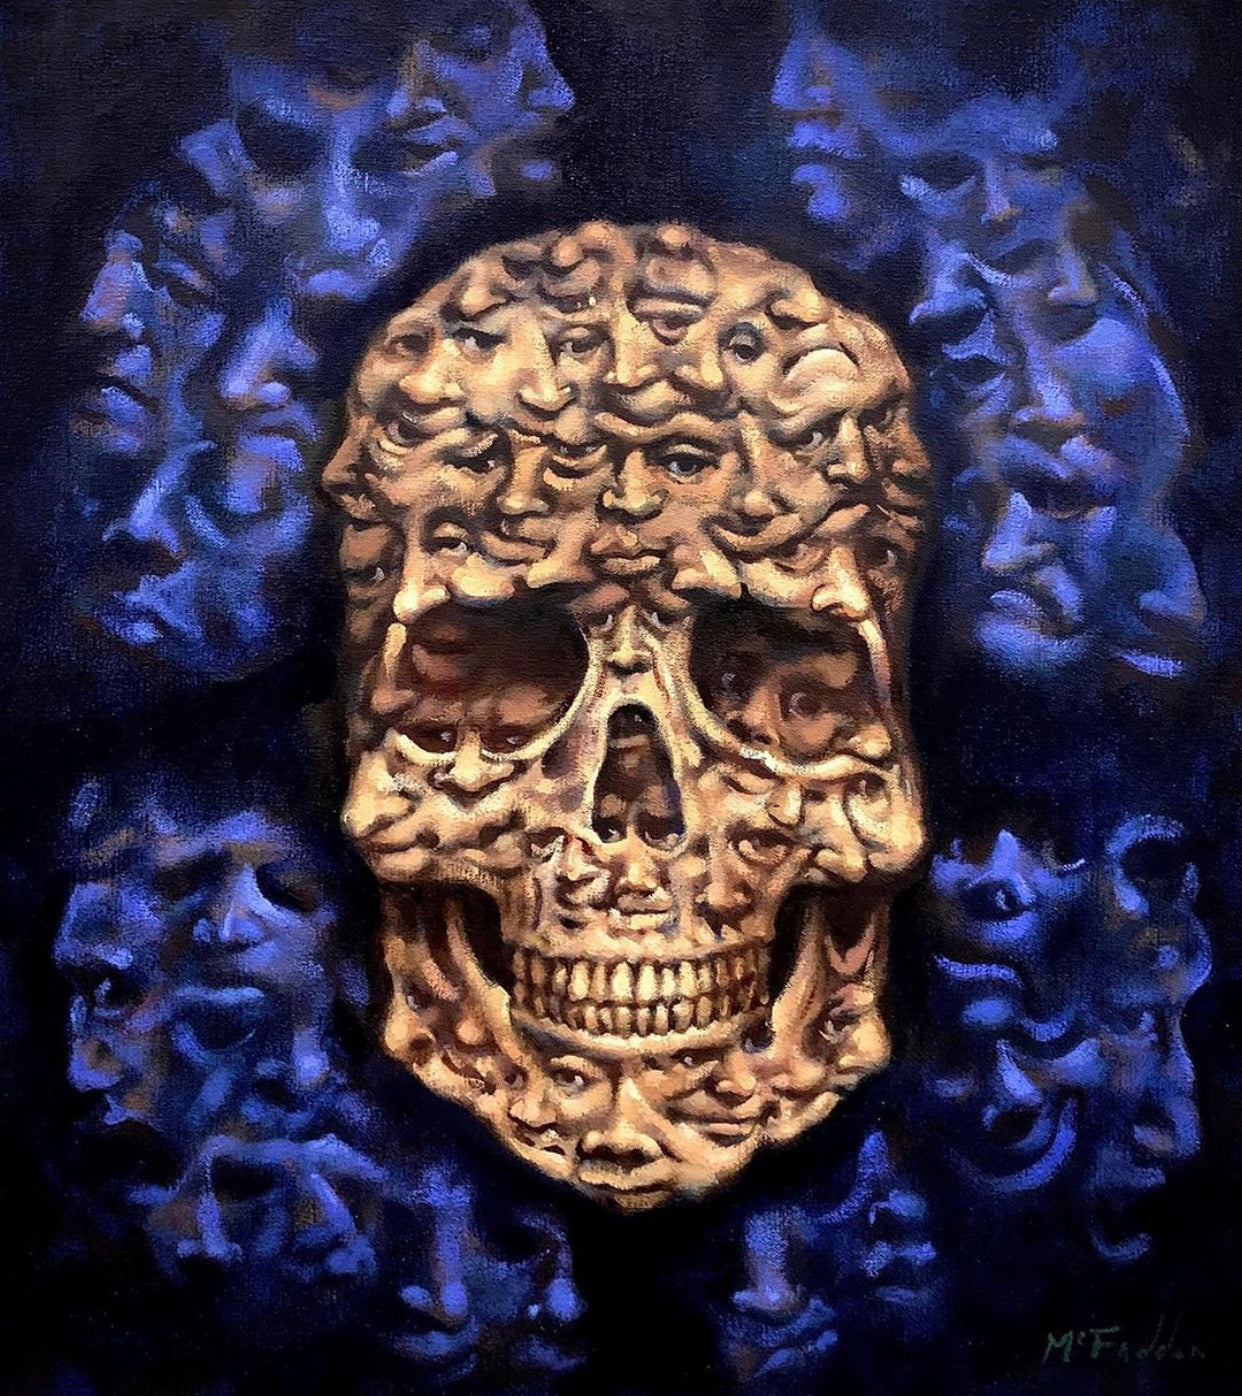 Original Totenkopf (deaths head) by Frank McFadden